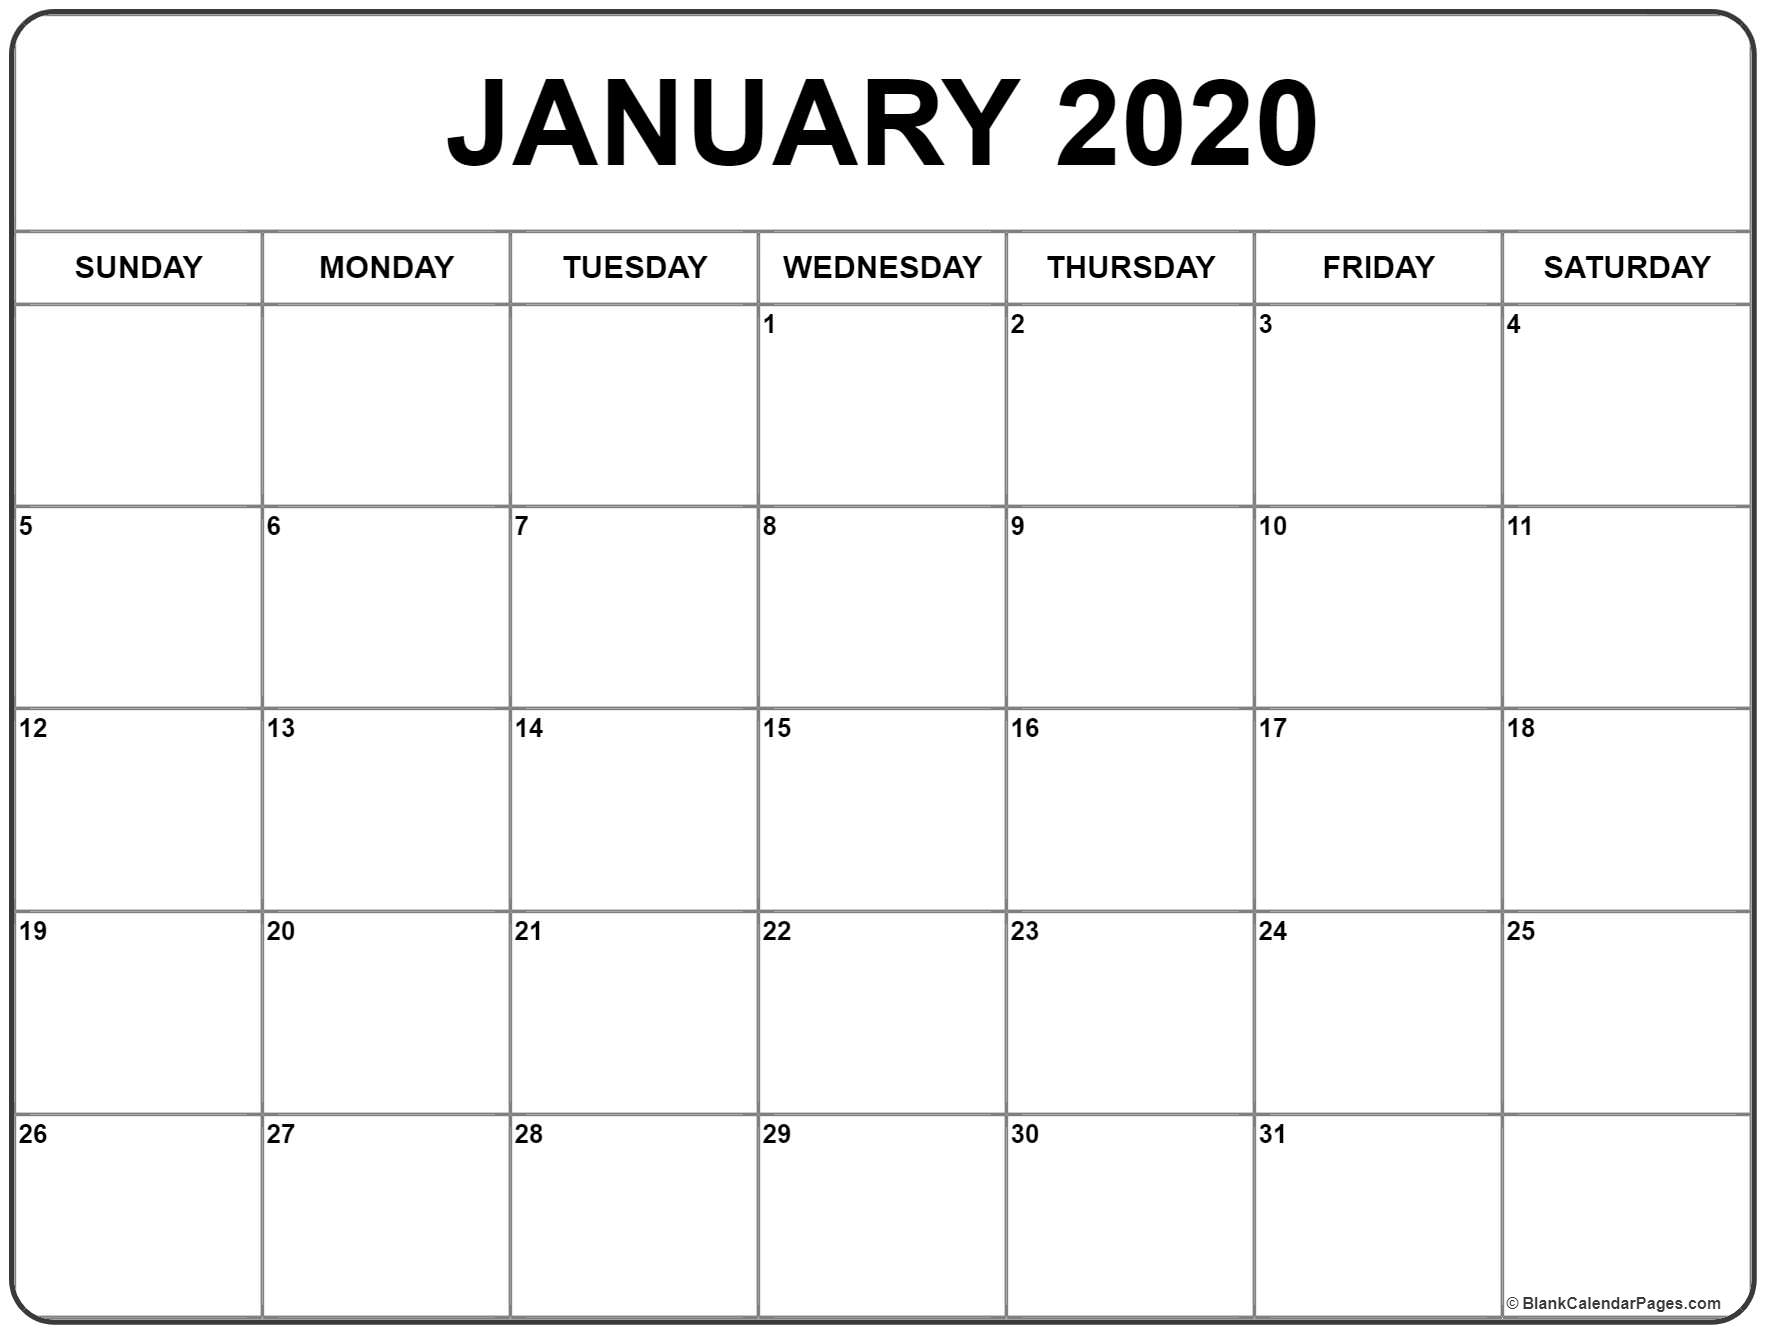 January 2020 Calendar | Free Printable Monthly Calendars within 2020 Imom Calendar Printable